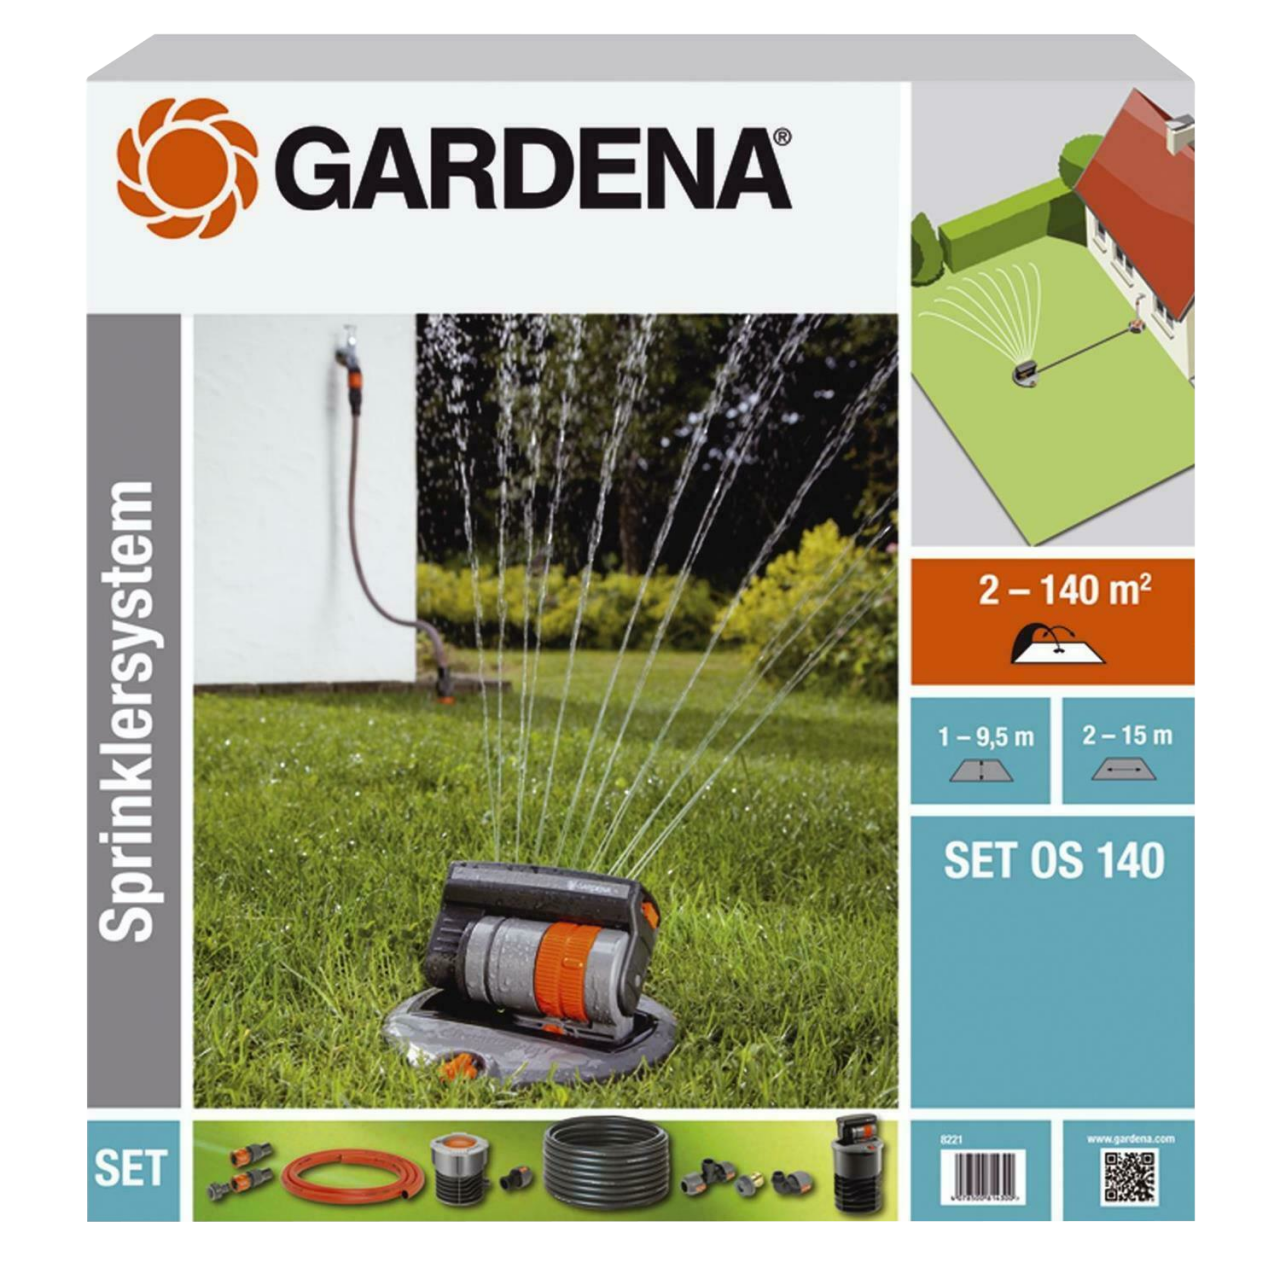 Gardena 8221-20 Komplett-Set OS 140 Versenk-Viereckregner Sprinklersystem